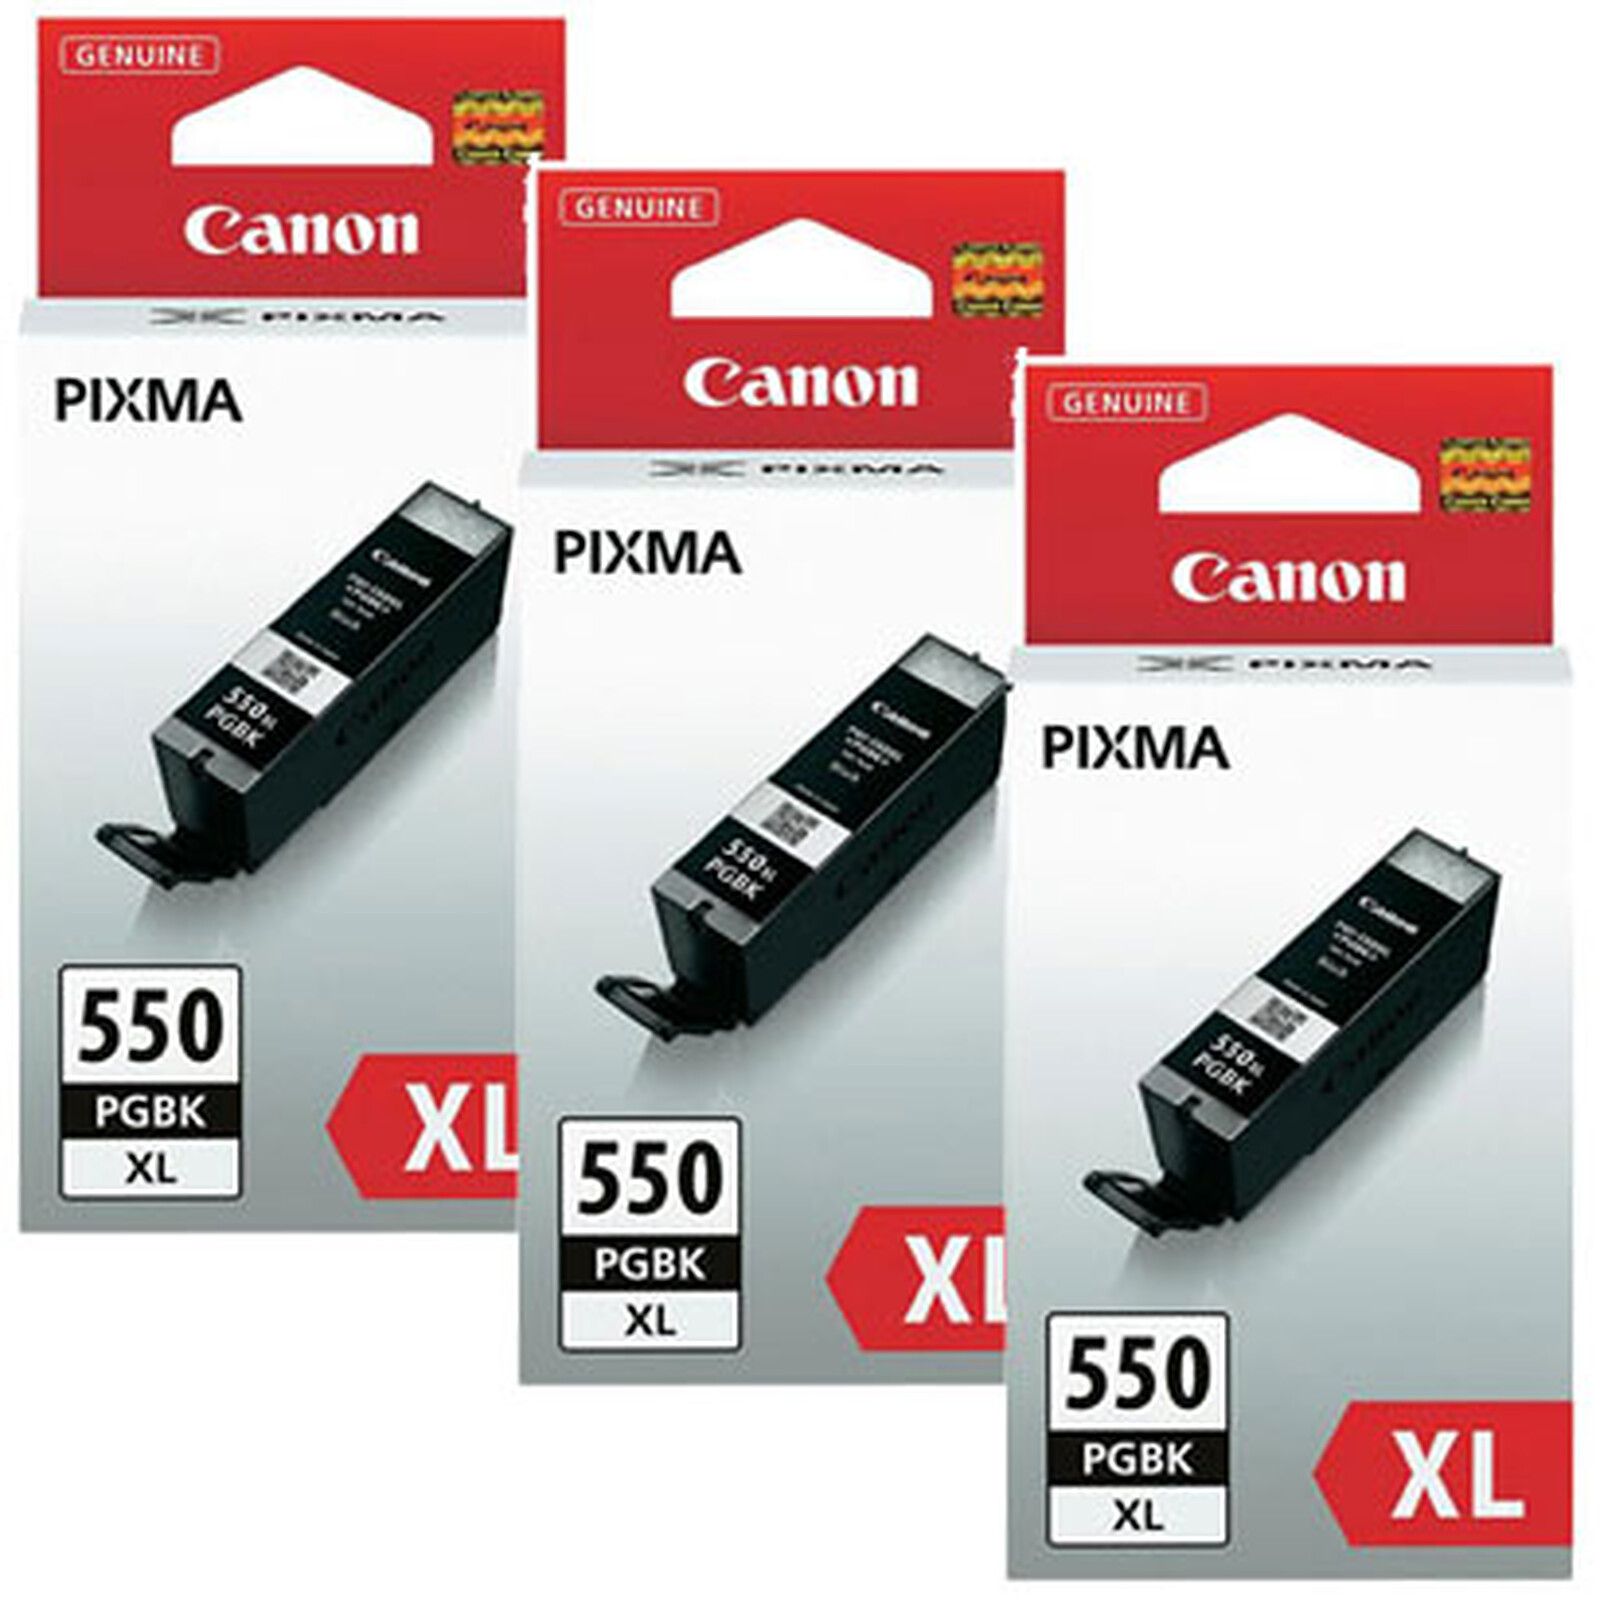 Canon PG-540 XL x 2 - Printer cartridge - LDLC